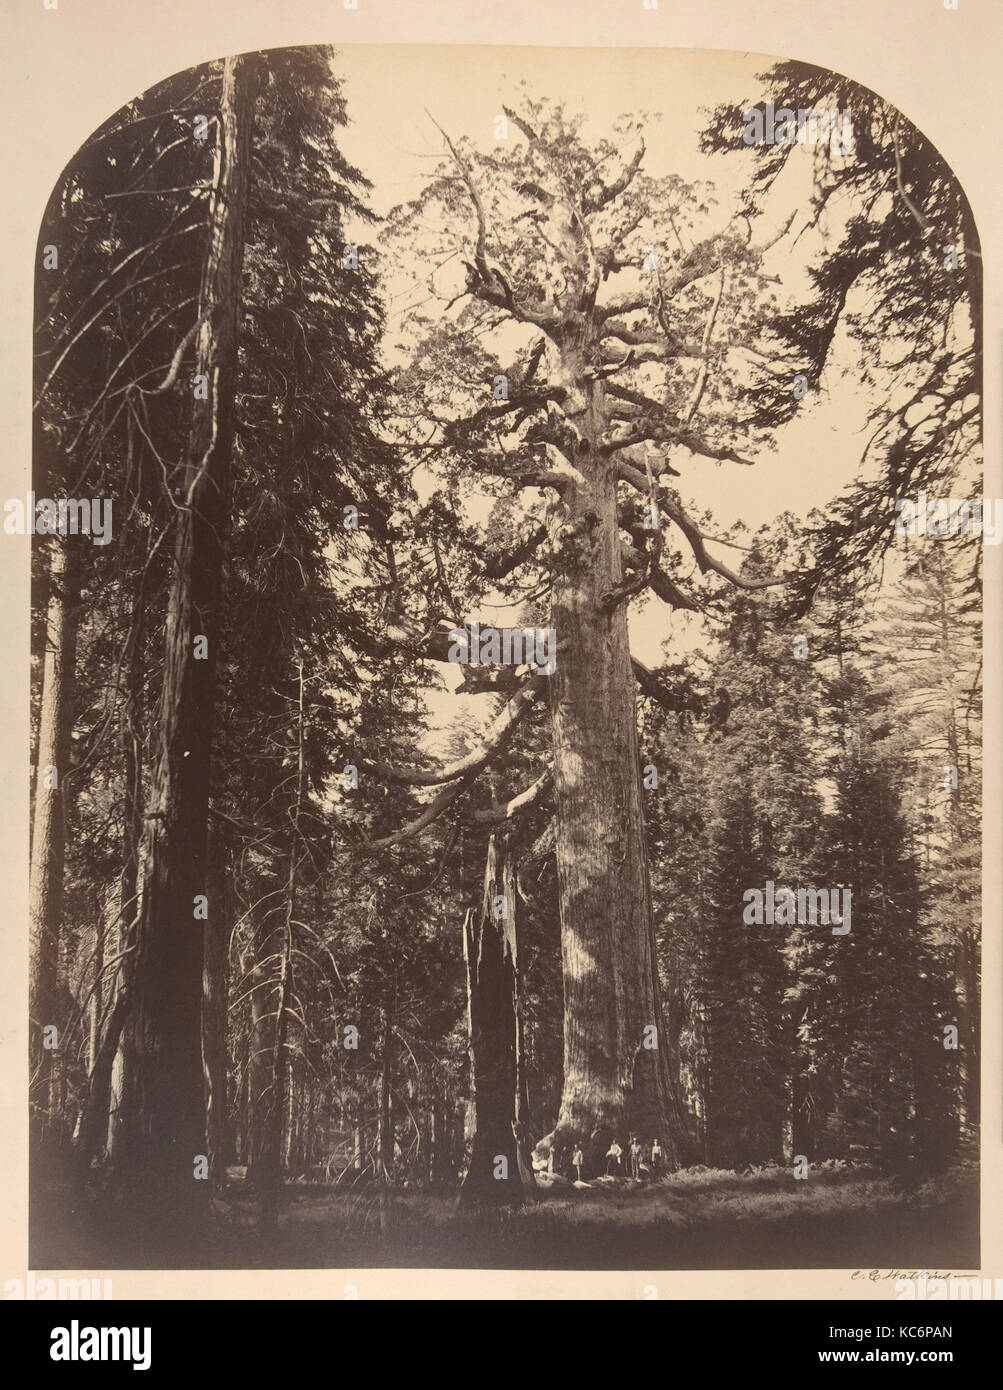 Die Grausigen Riesen, Mariposa Grove, Yosemite, Carleton E. Watkins, 1861 Stockfoto